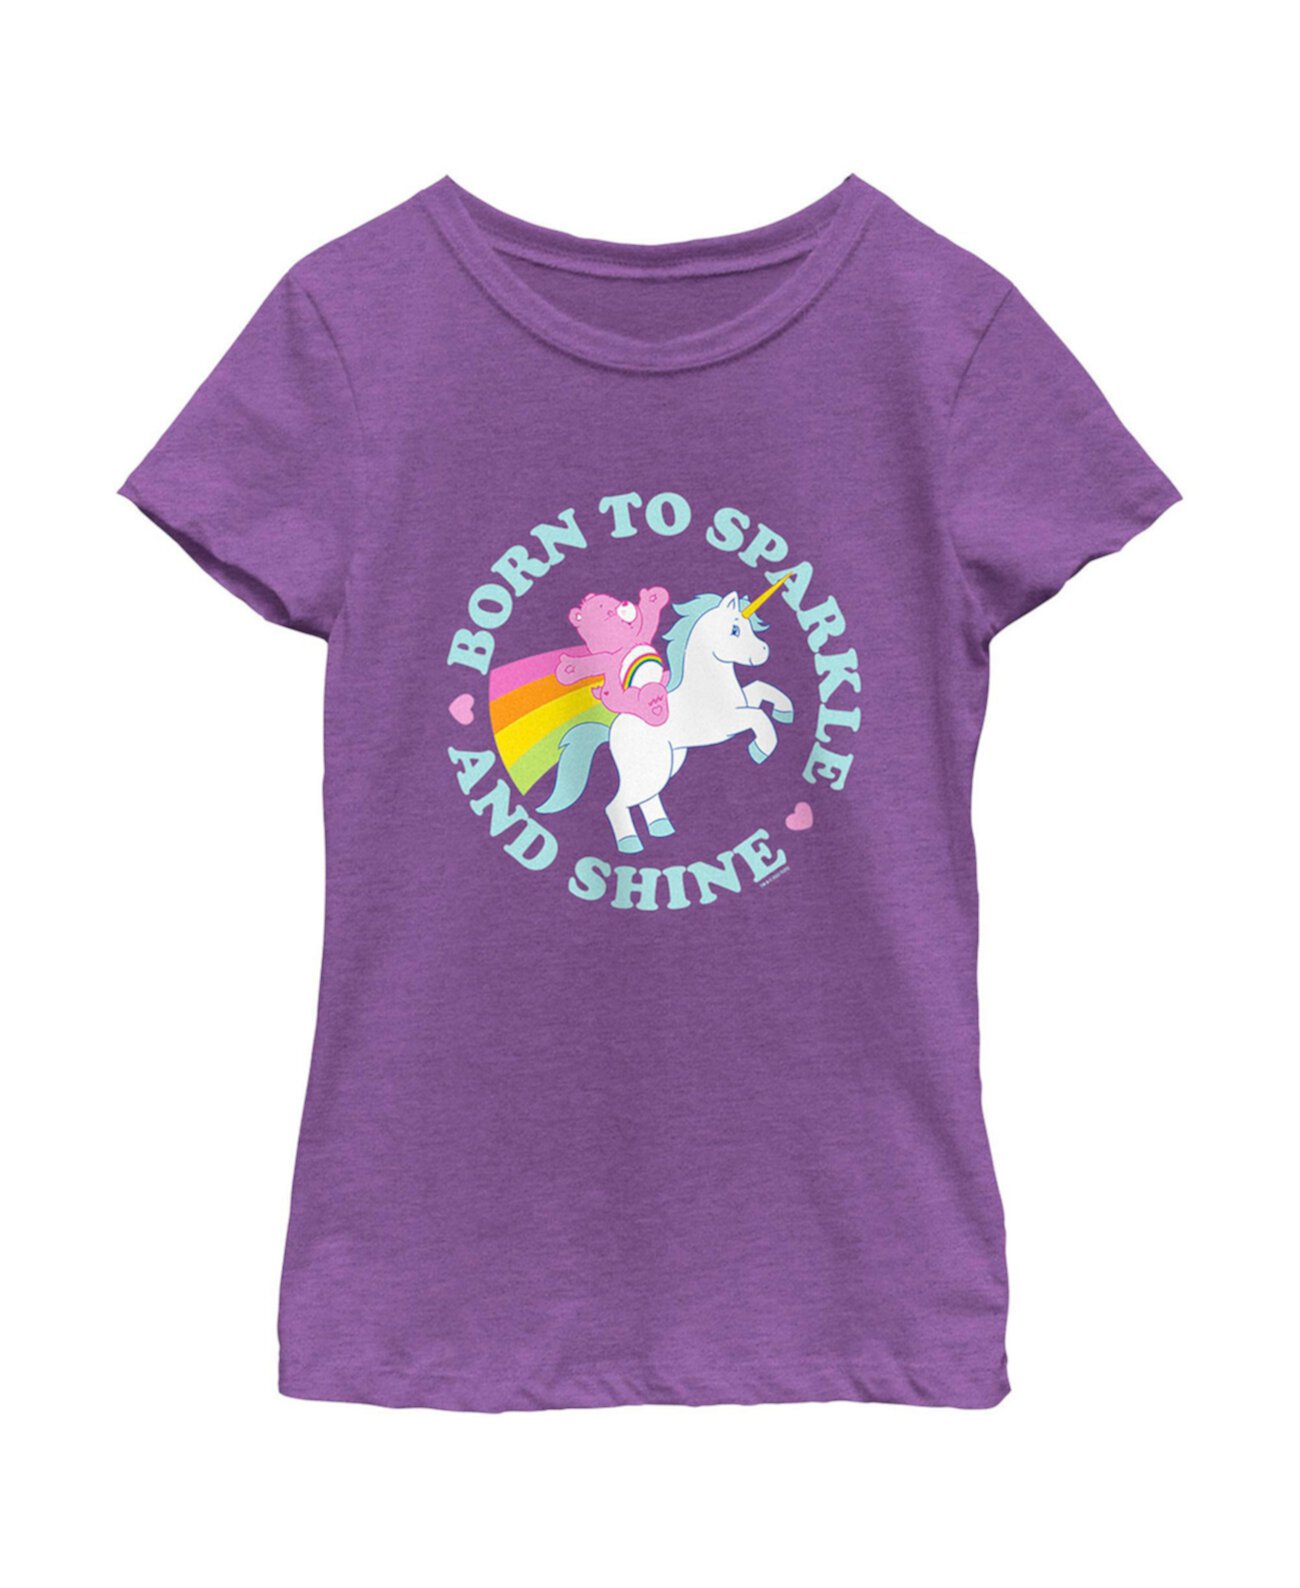 Детская футболка для поднятия настроения Girl's Born to Sparkle and Shine Care Bears